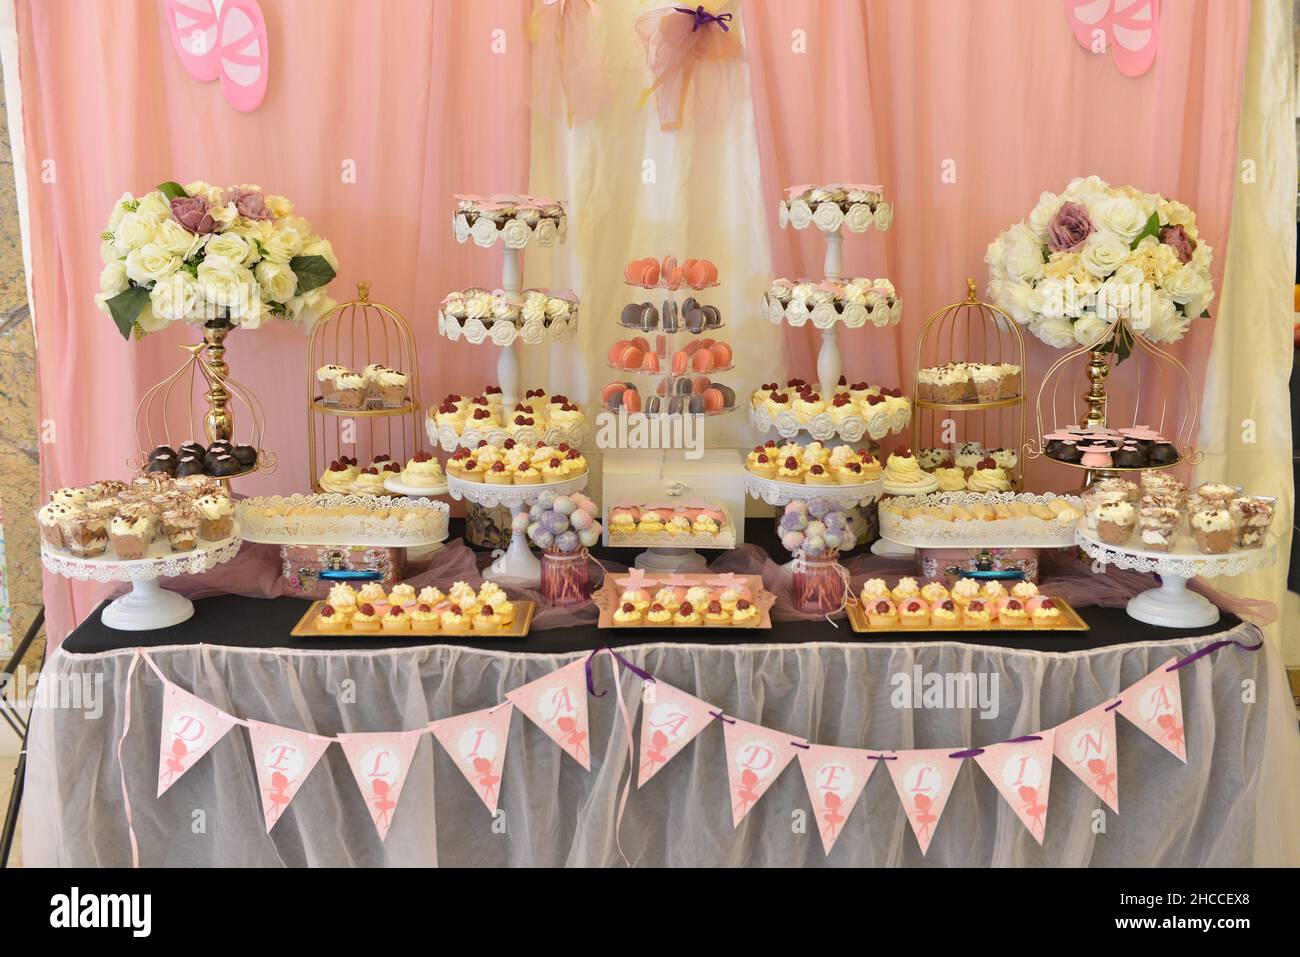 Mesa de banquetes de pasteles bellamente decorados con ramos de flores en un mantel listo para un evento Foto de stock